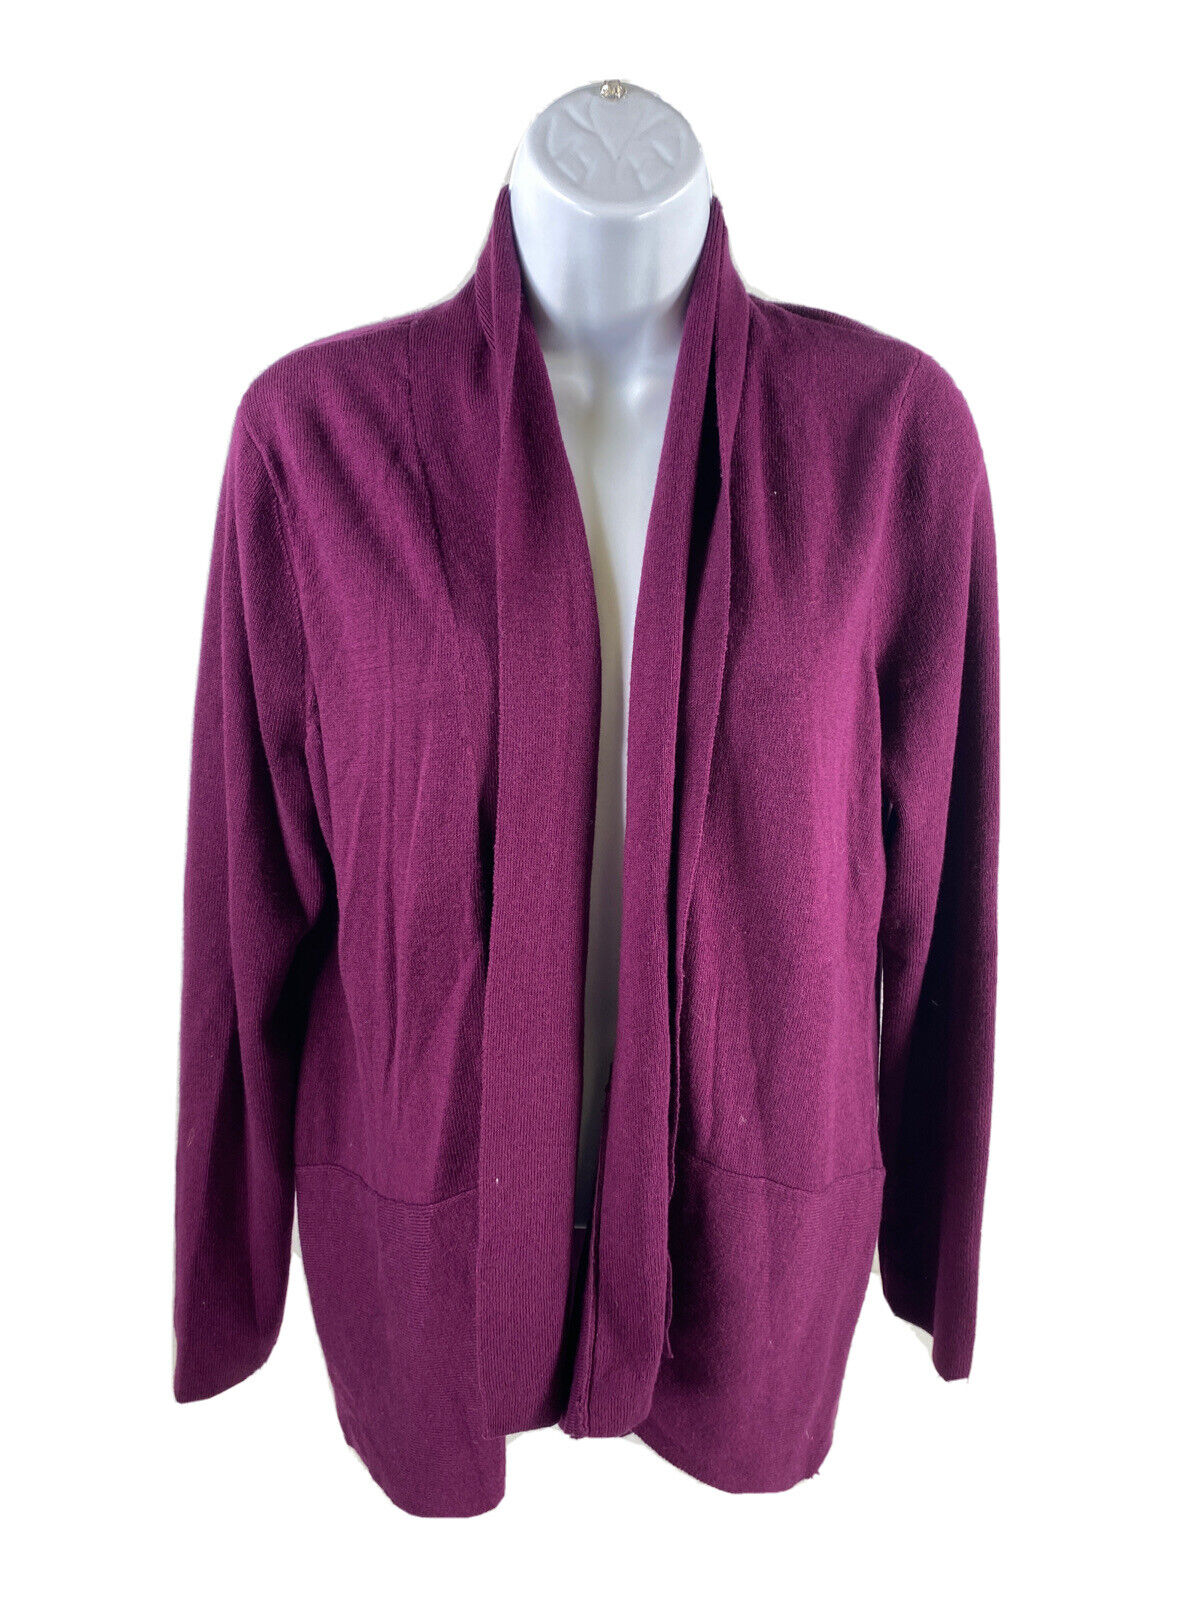 Chico's Women's Purple Long Sleeve Knit Cardigan Sweater - 1 (US M)